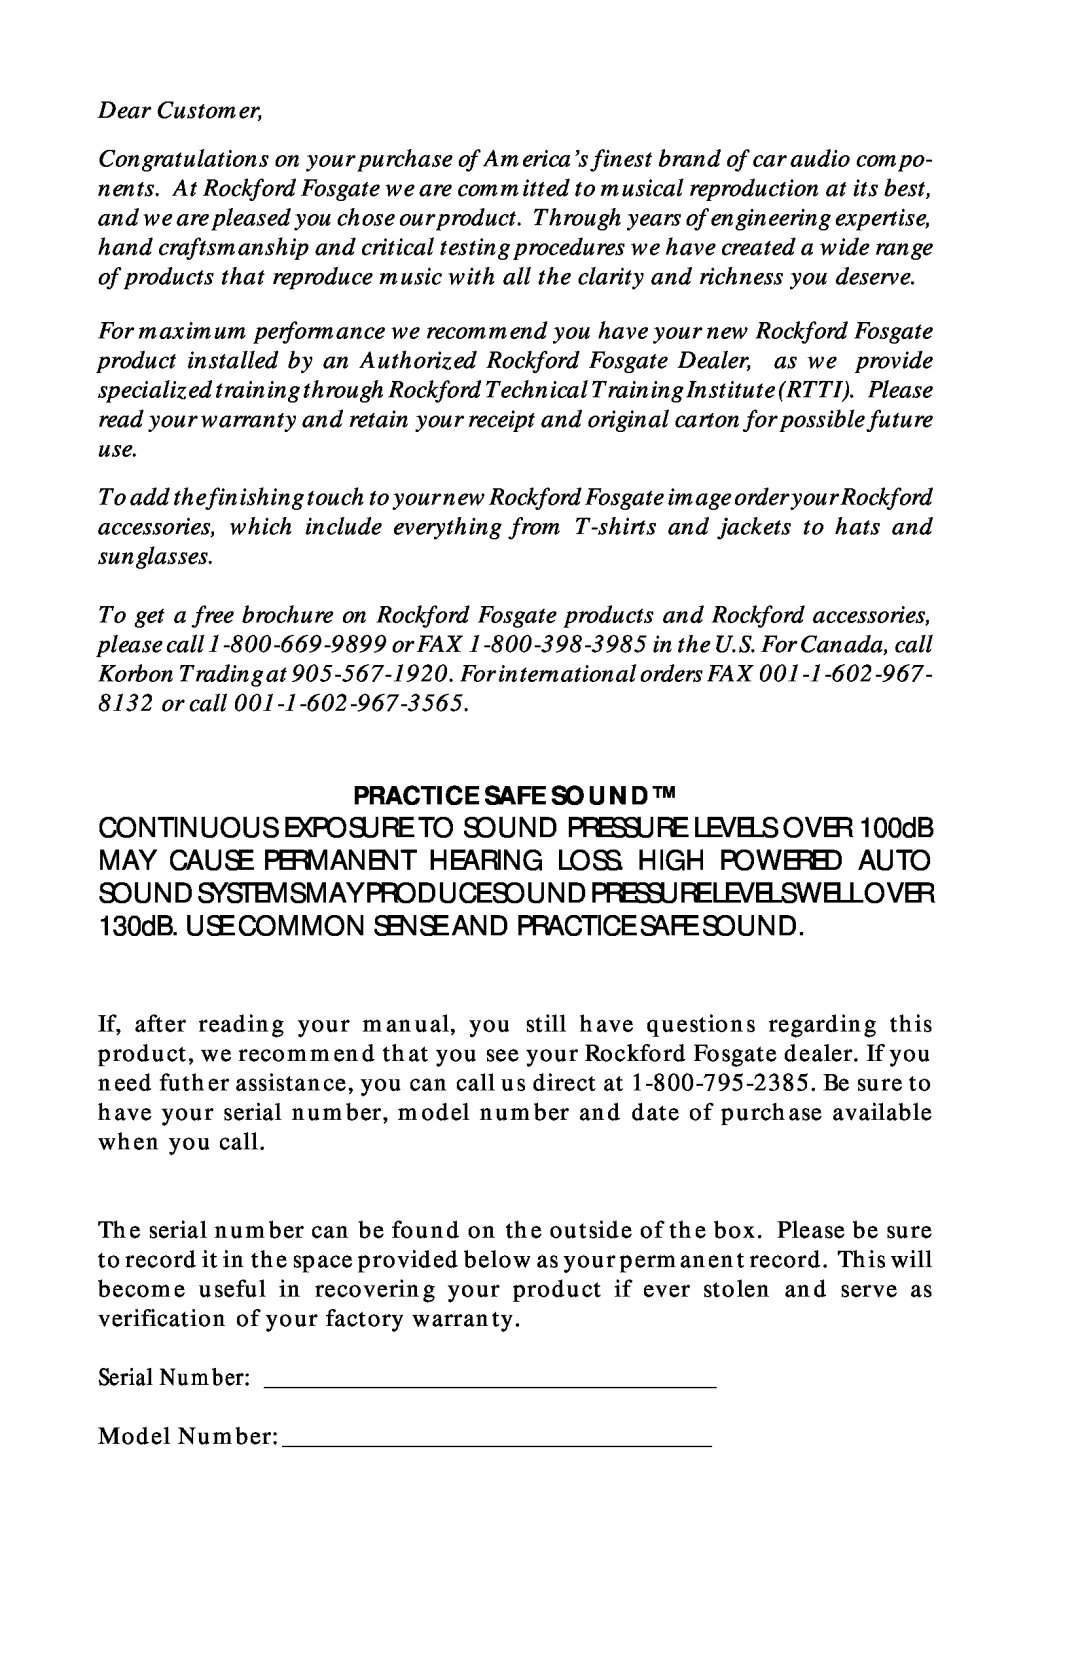 Rockford Fosgate PWR-812, PWR-410, PWR-815, PWR-810, PWR-412, PWR-415 owner manual Practice Safe Sound 